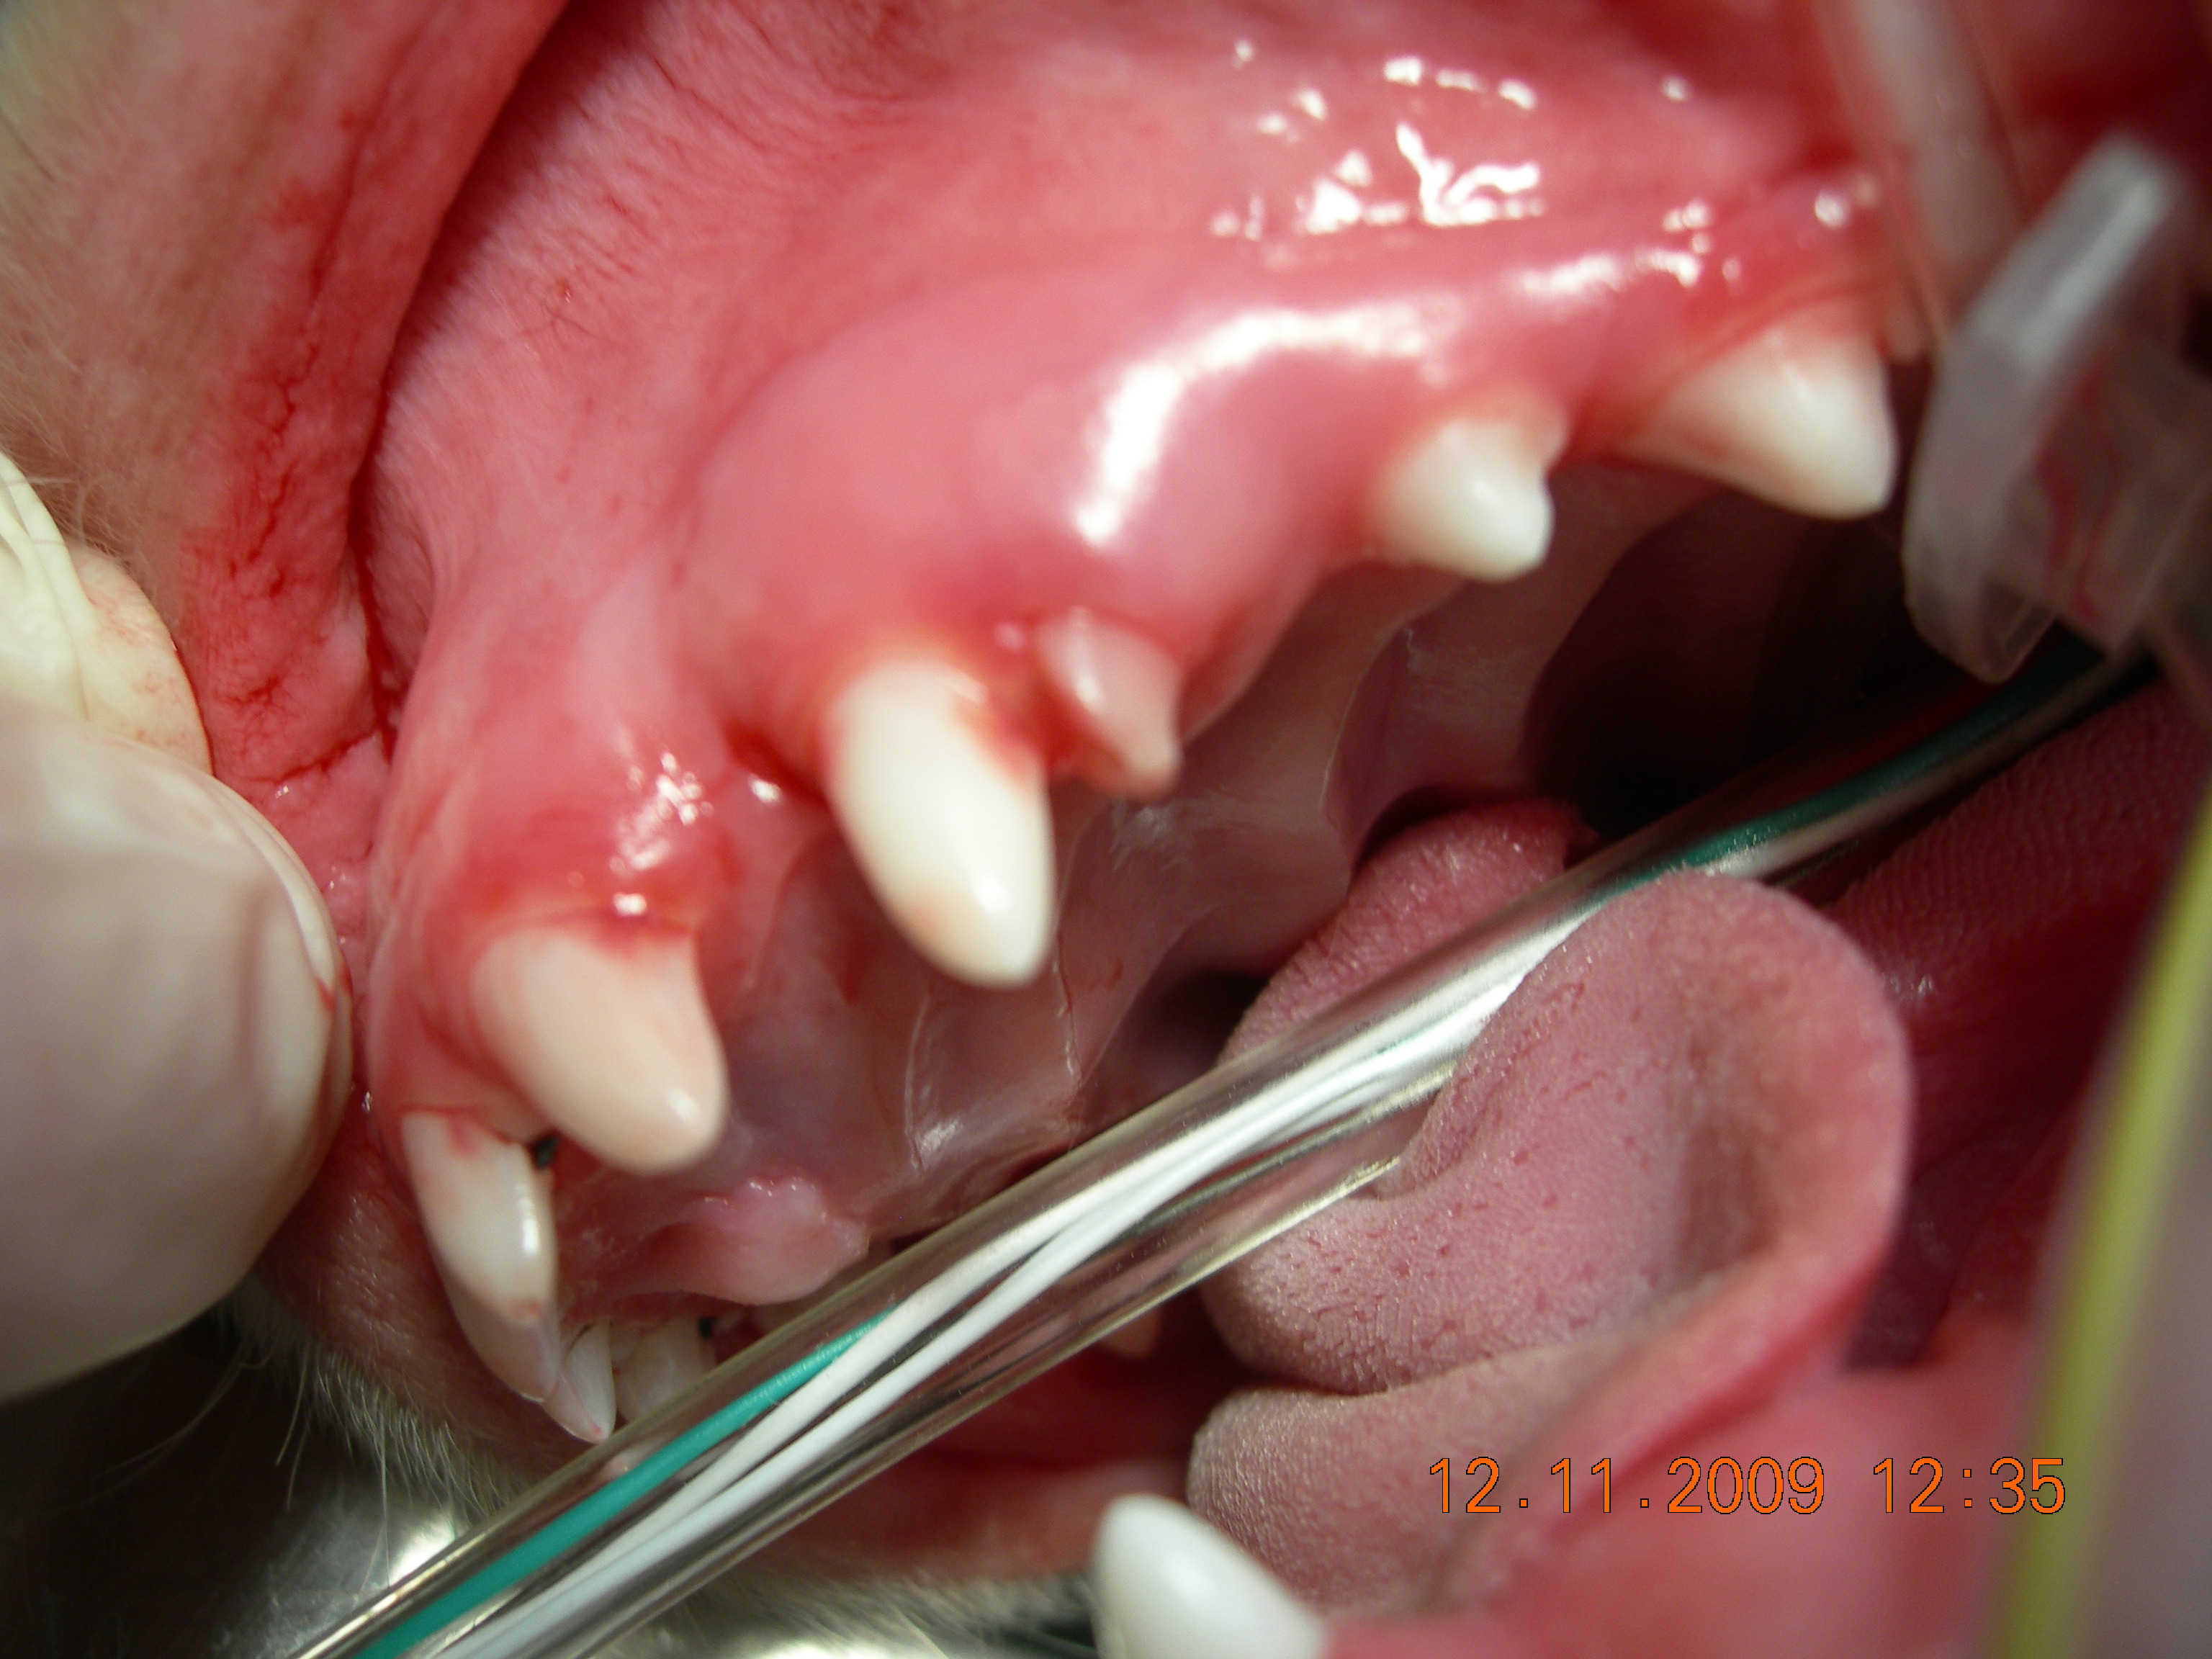 Retained baby tooth broken off